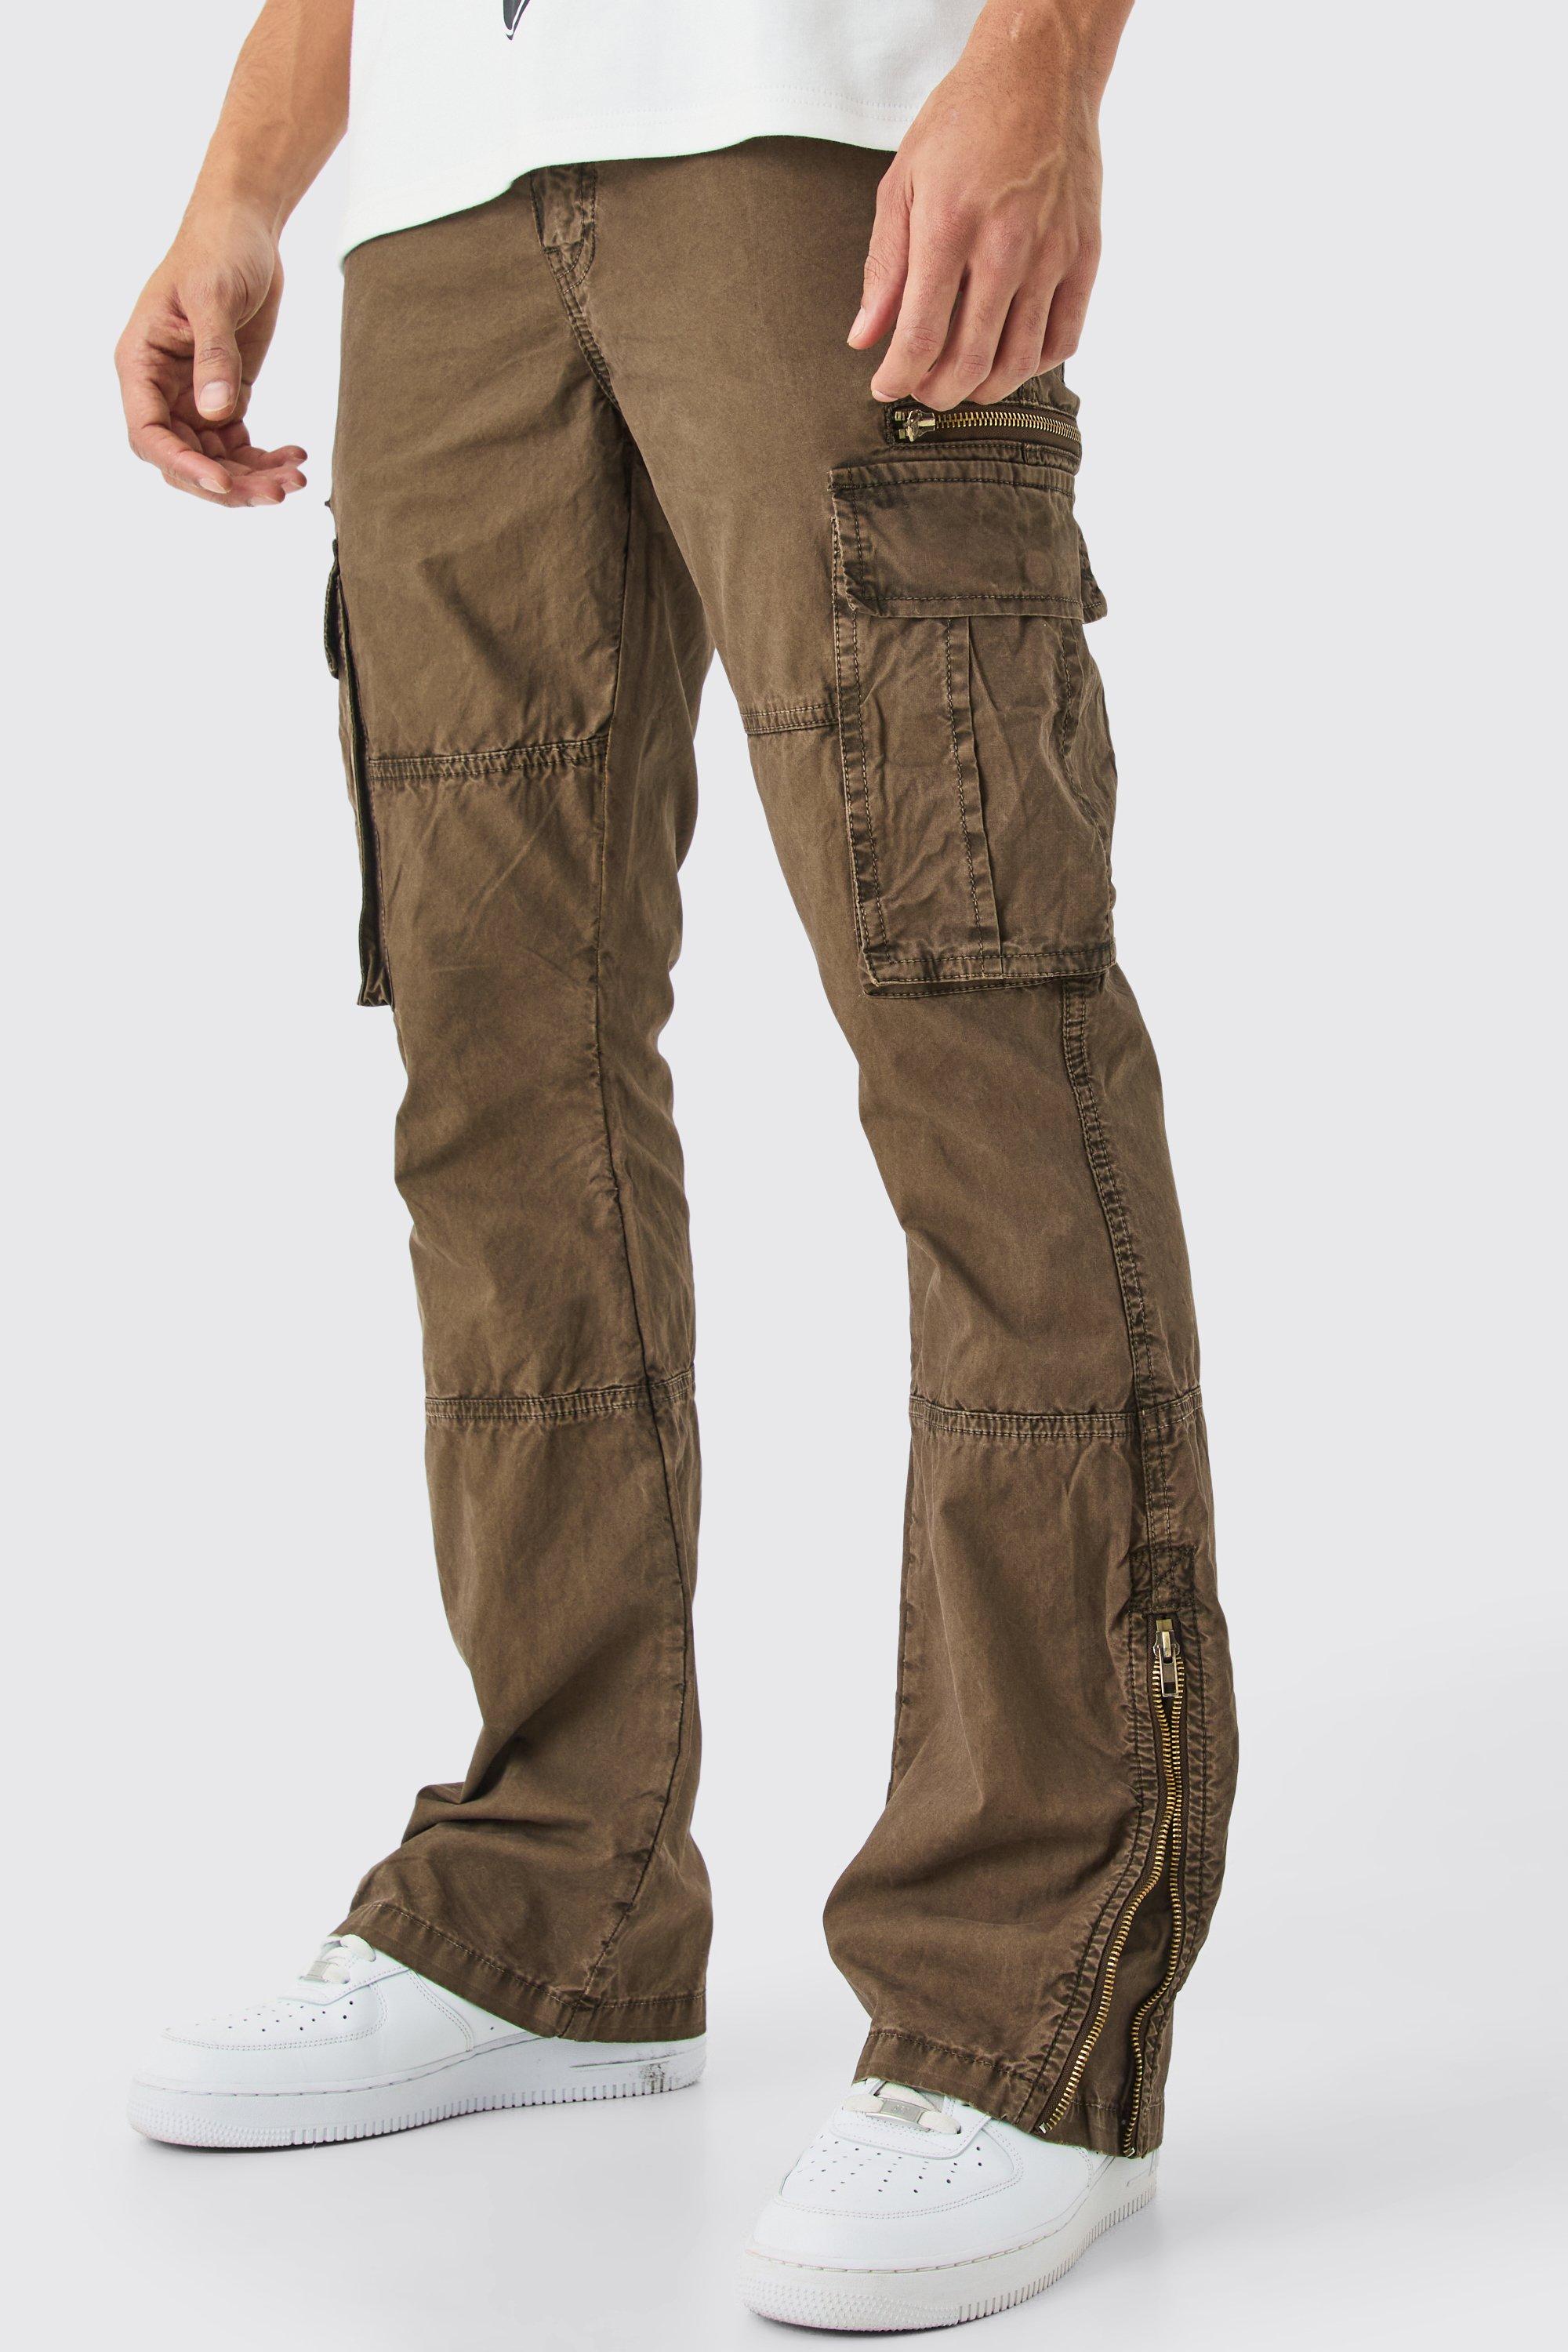 pantalon cargo slim délavé homme - brun - 30, brun